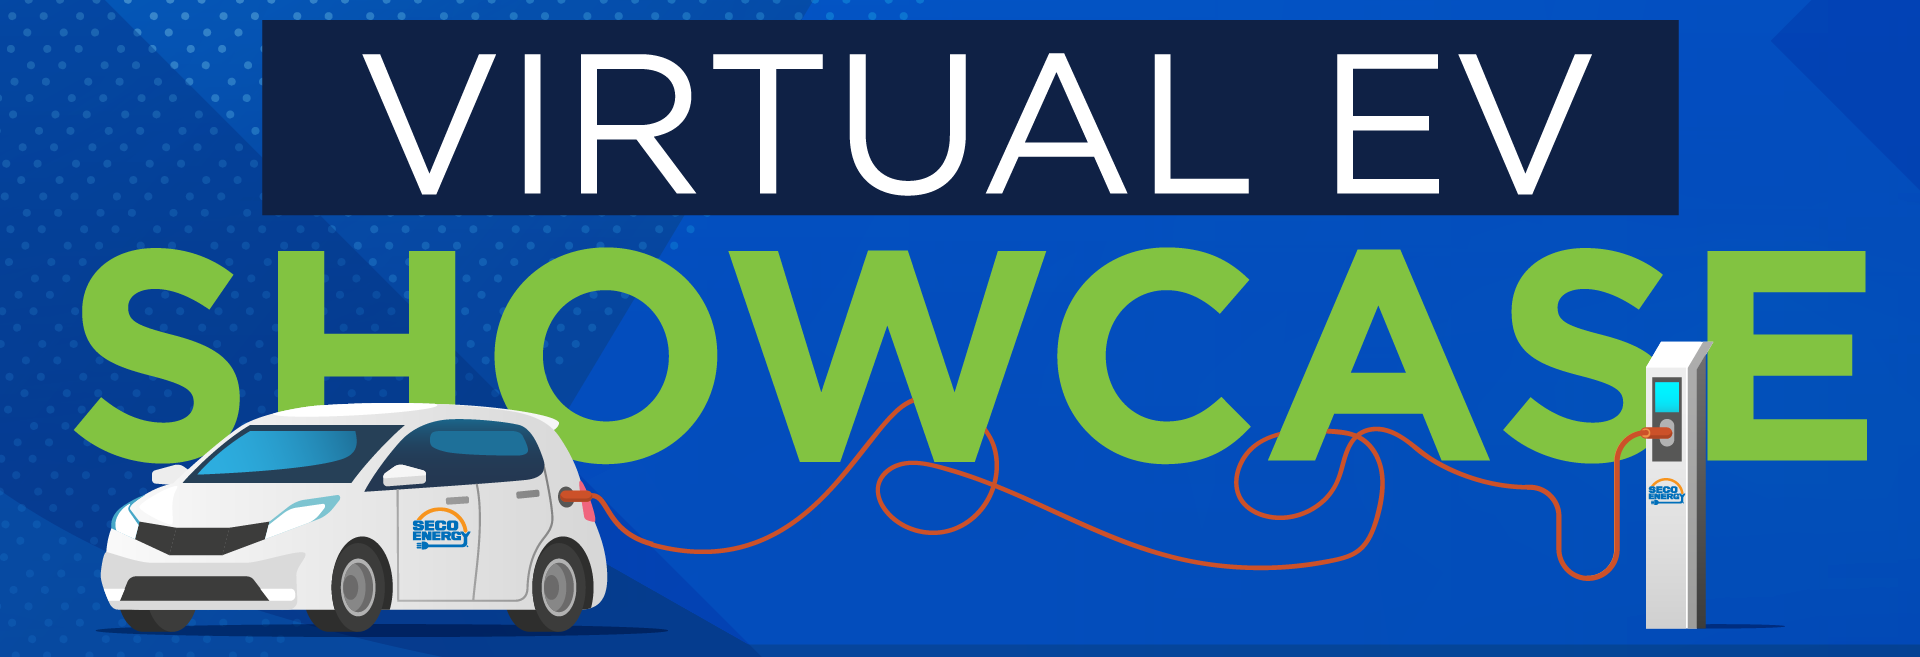 Virtual Showcase